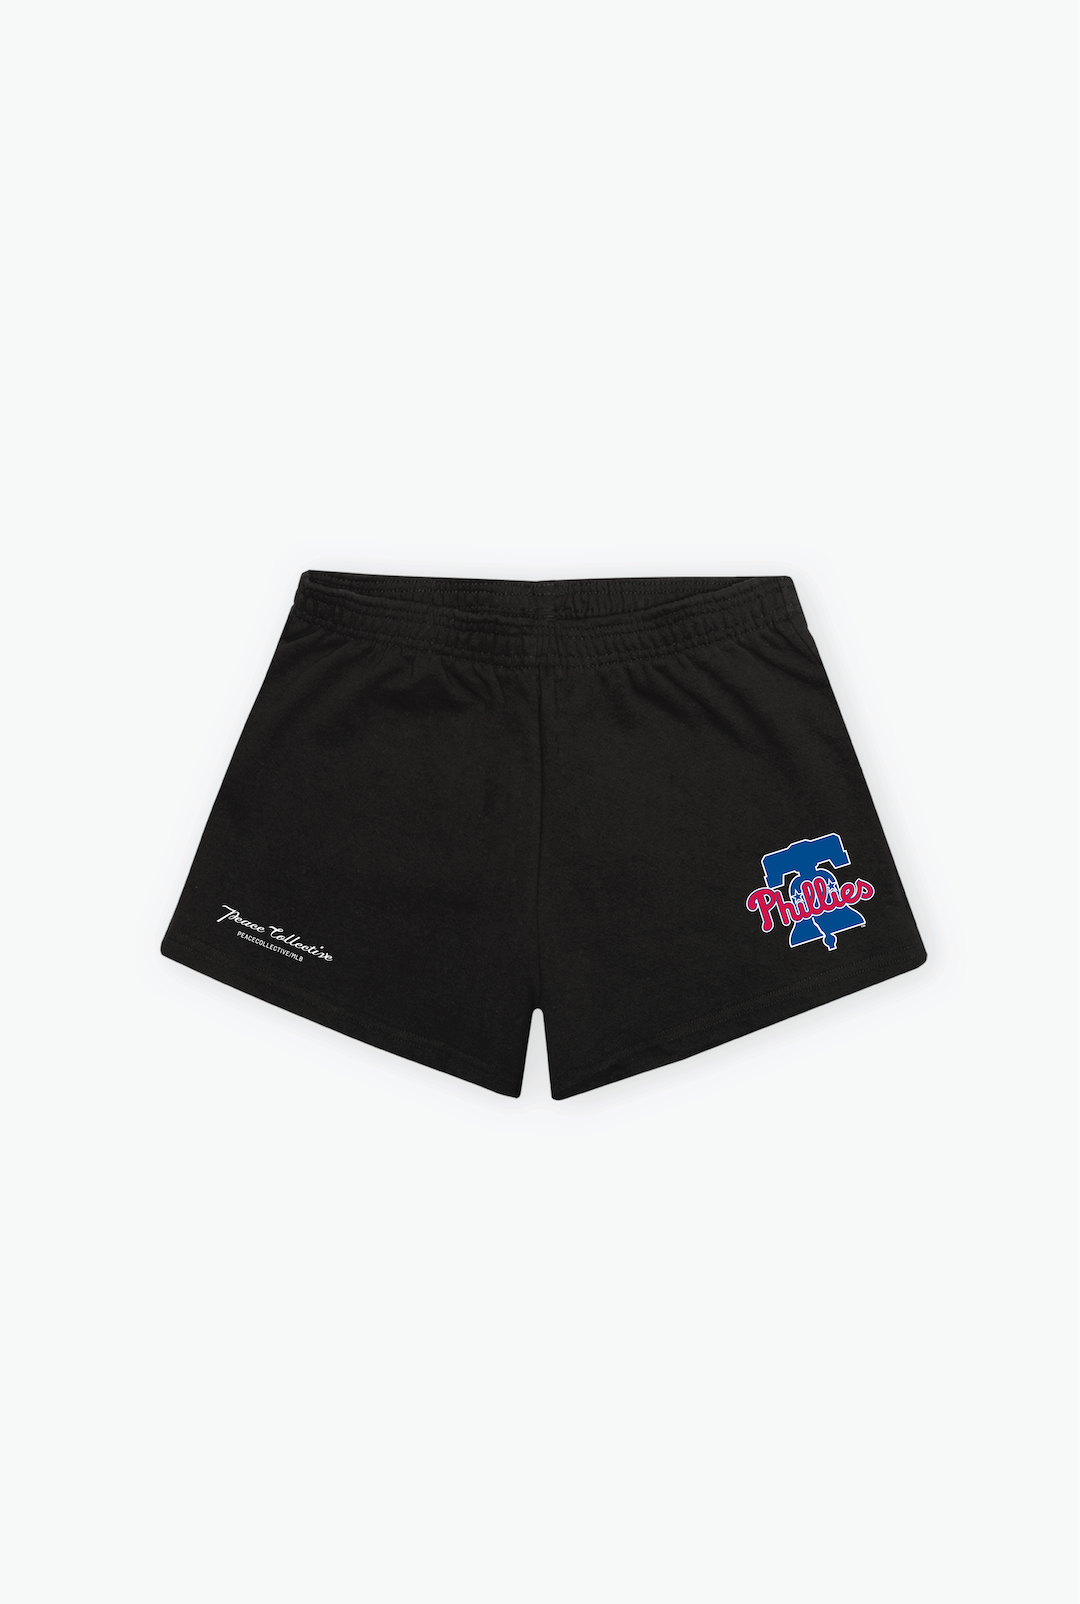 Philadelphia Phillies Logo Women's Fleece Shorts - Black